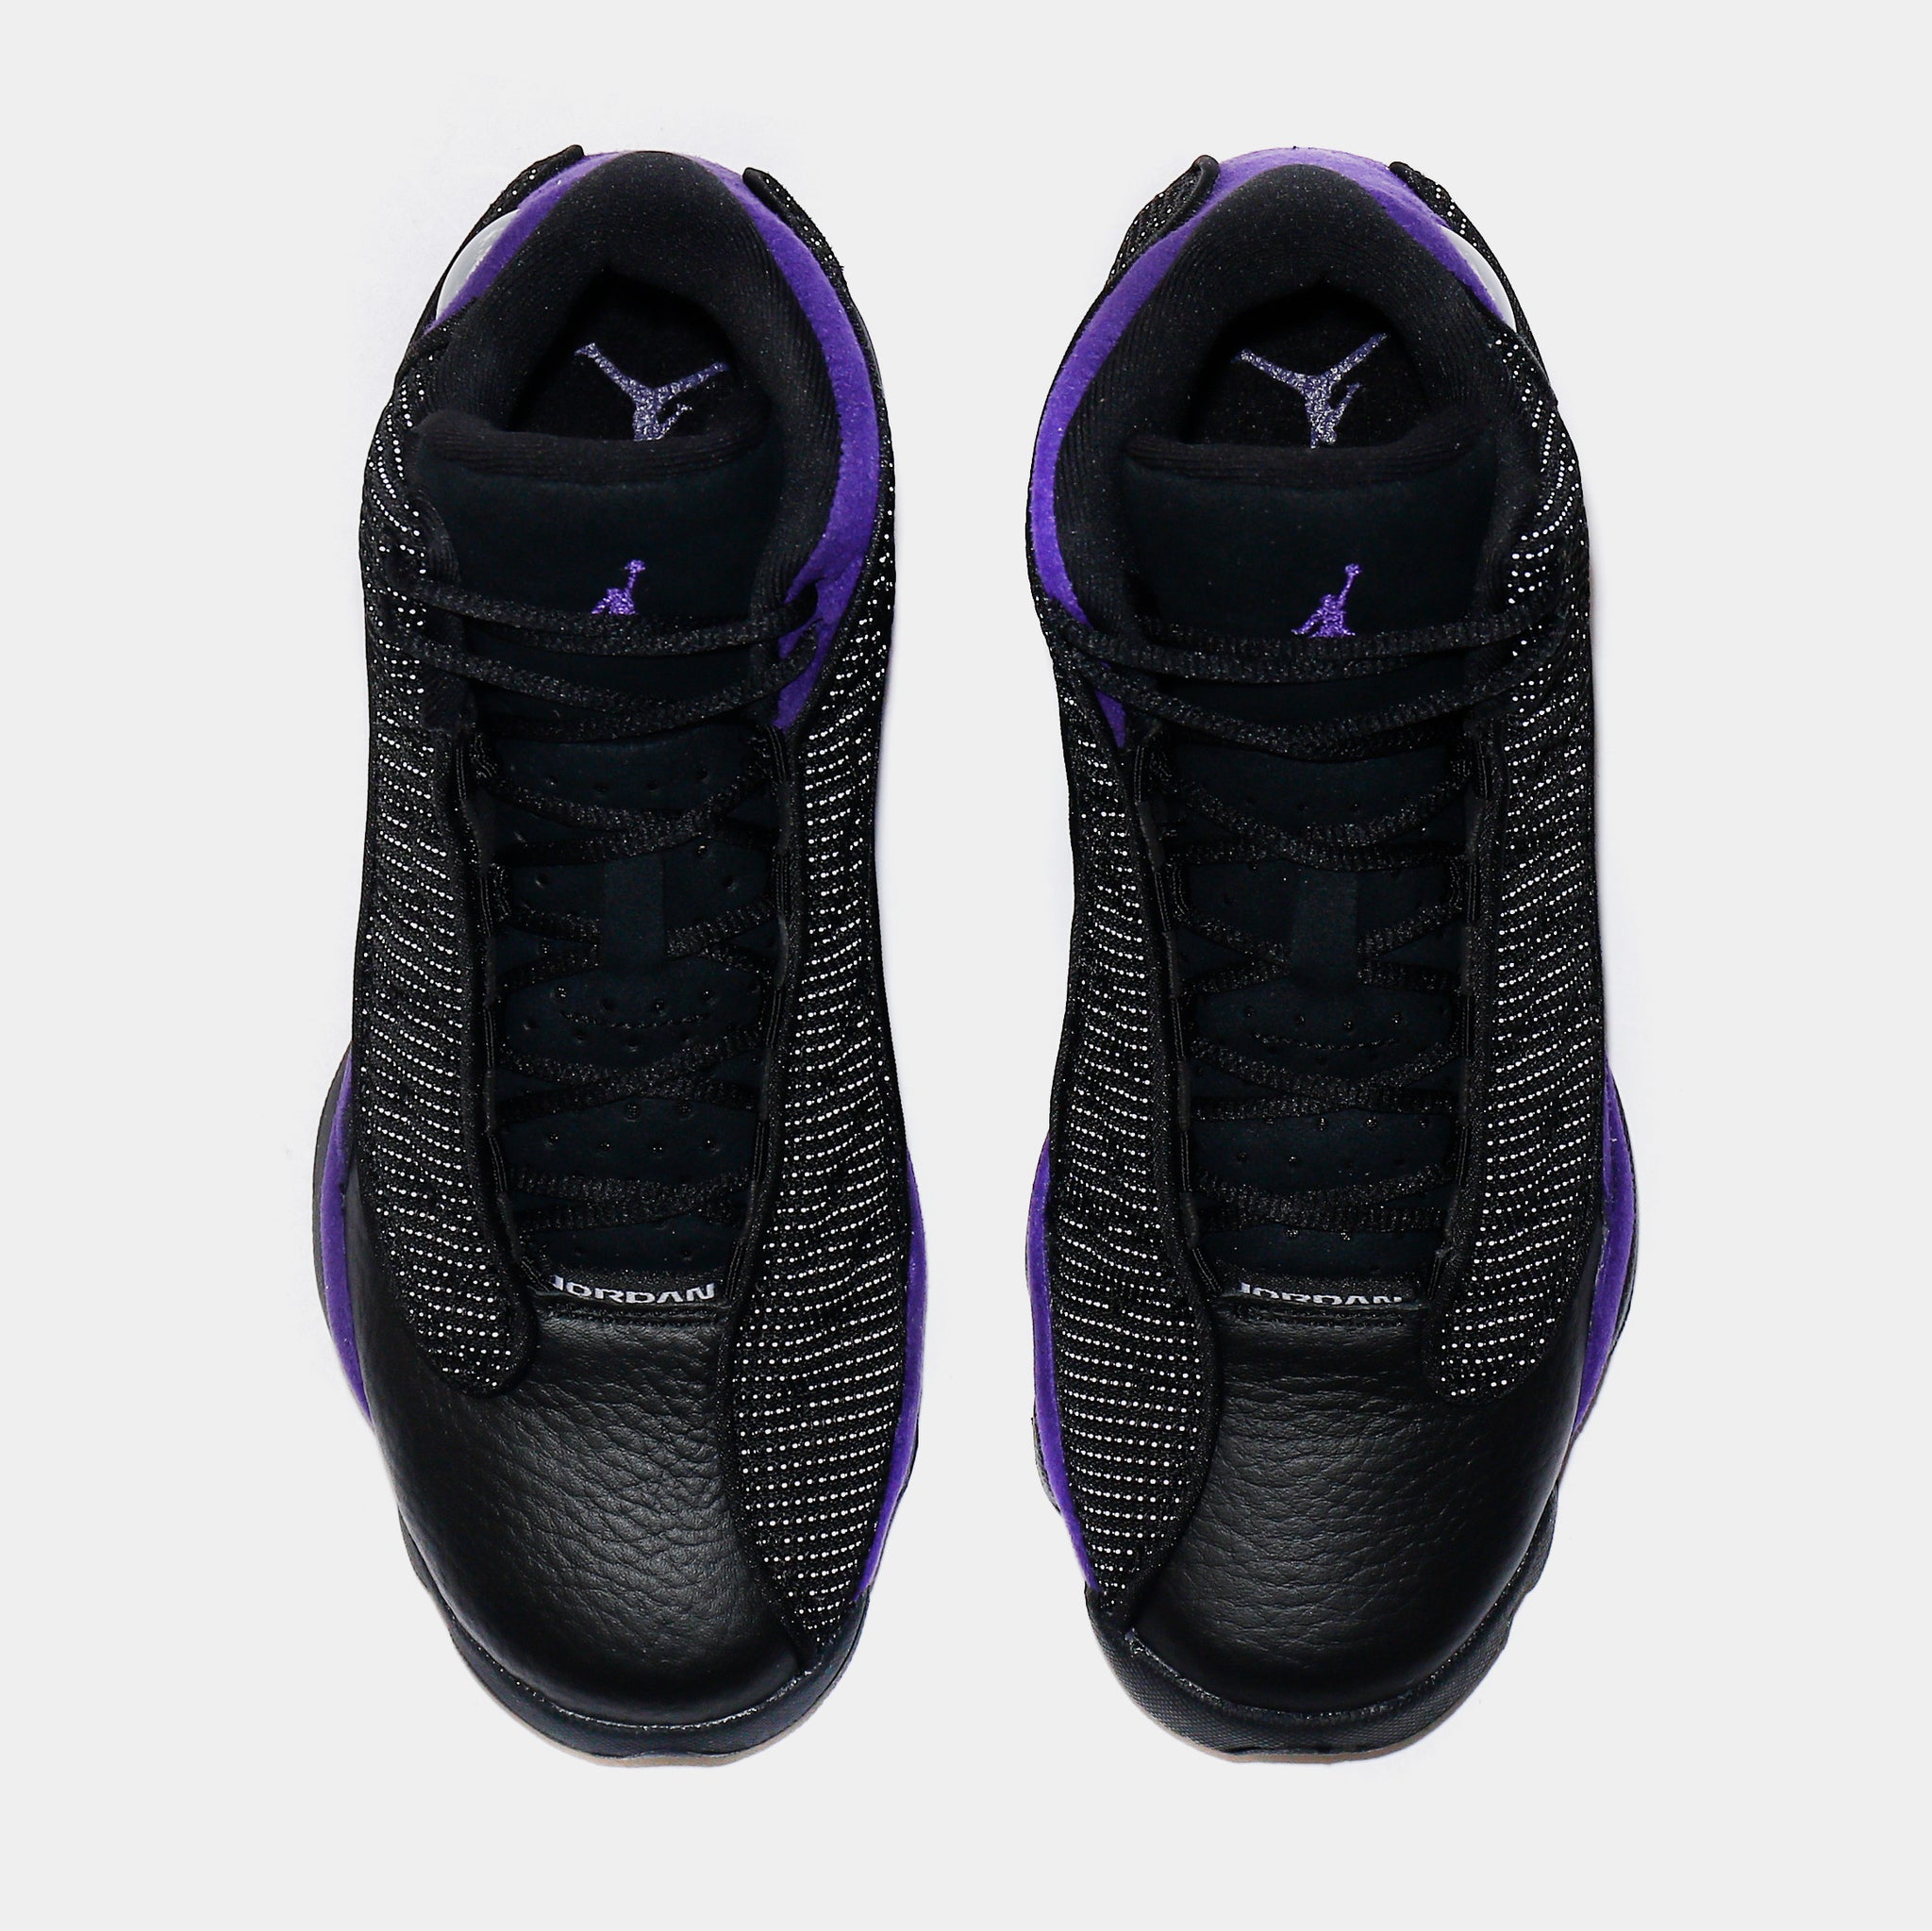 Where To Buy The Nike Air Jordan 13 Court Purple